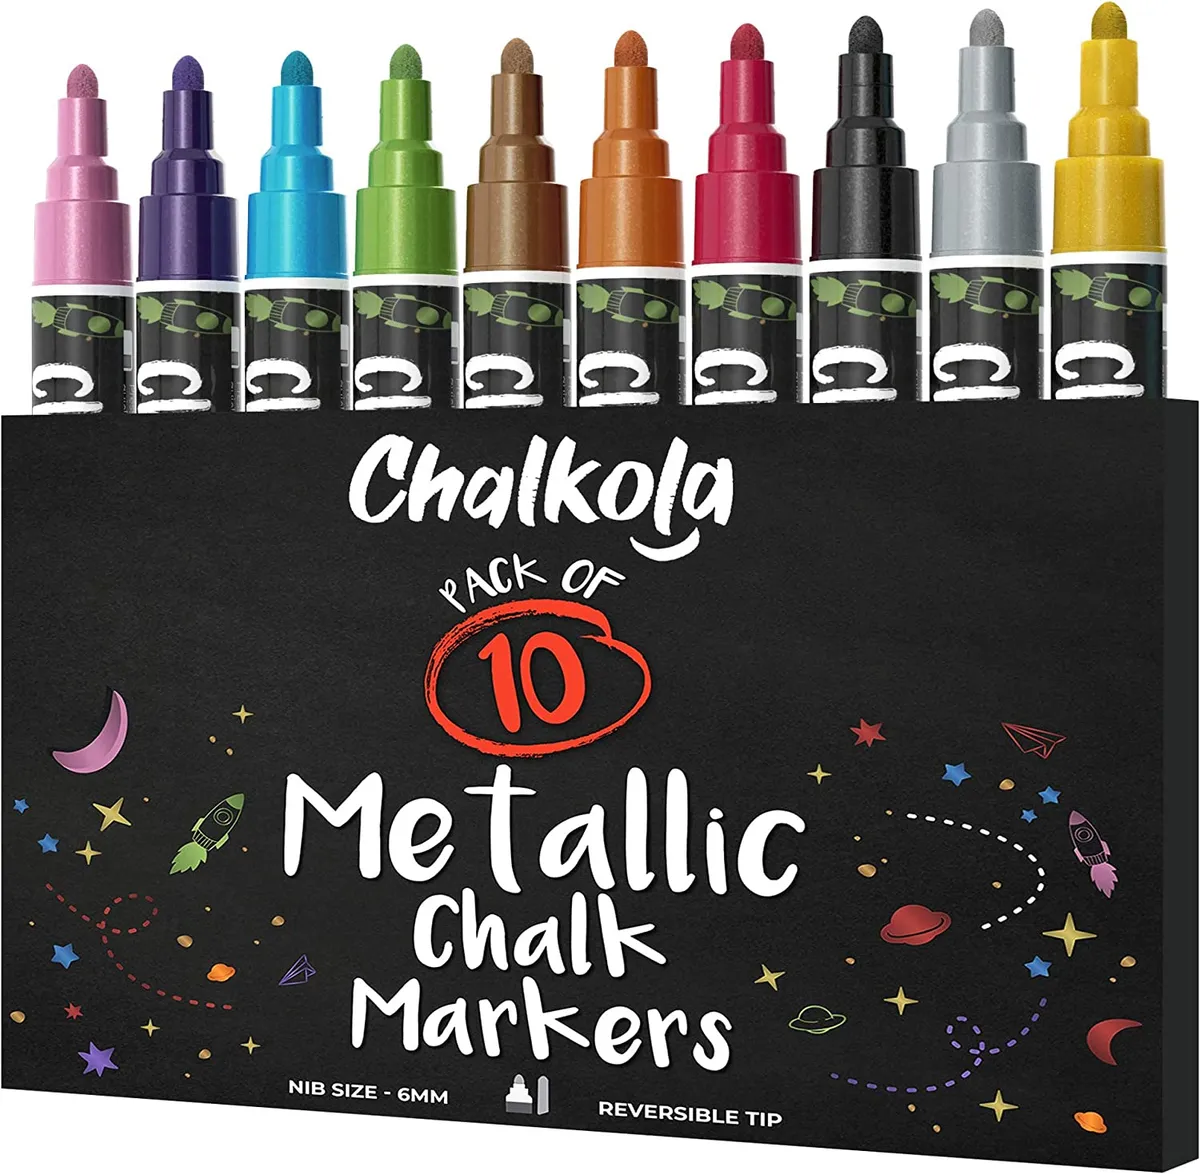 Metallic chalk markers